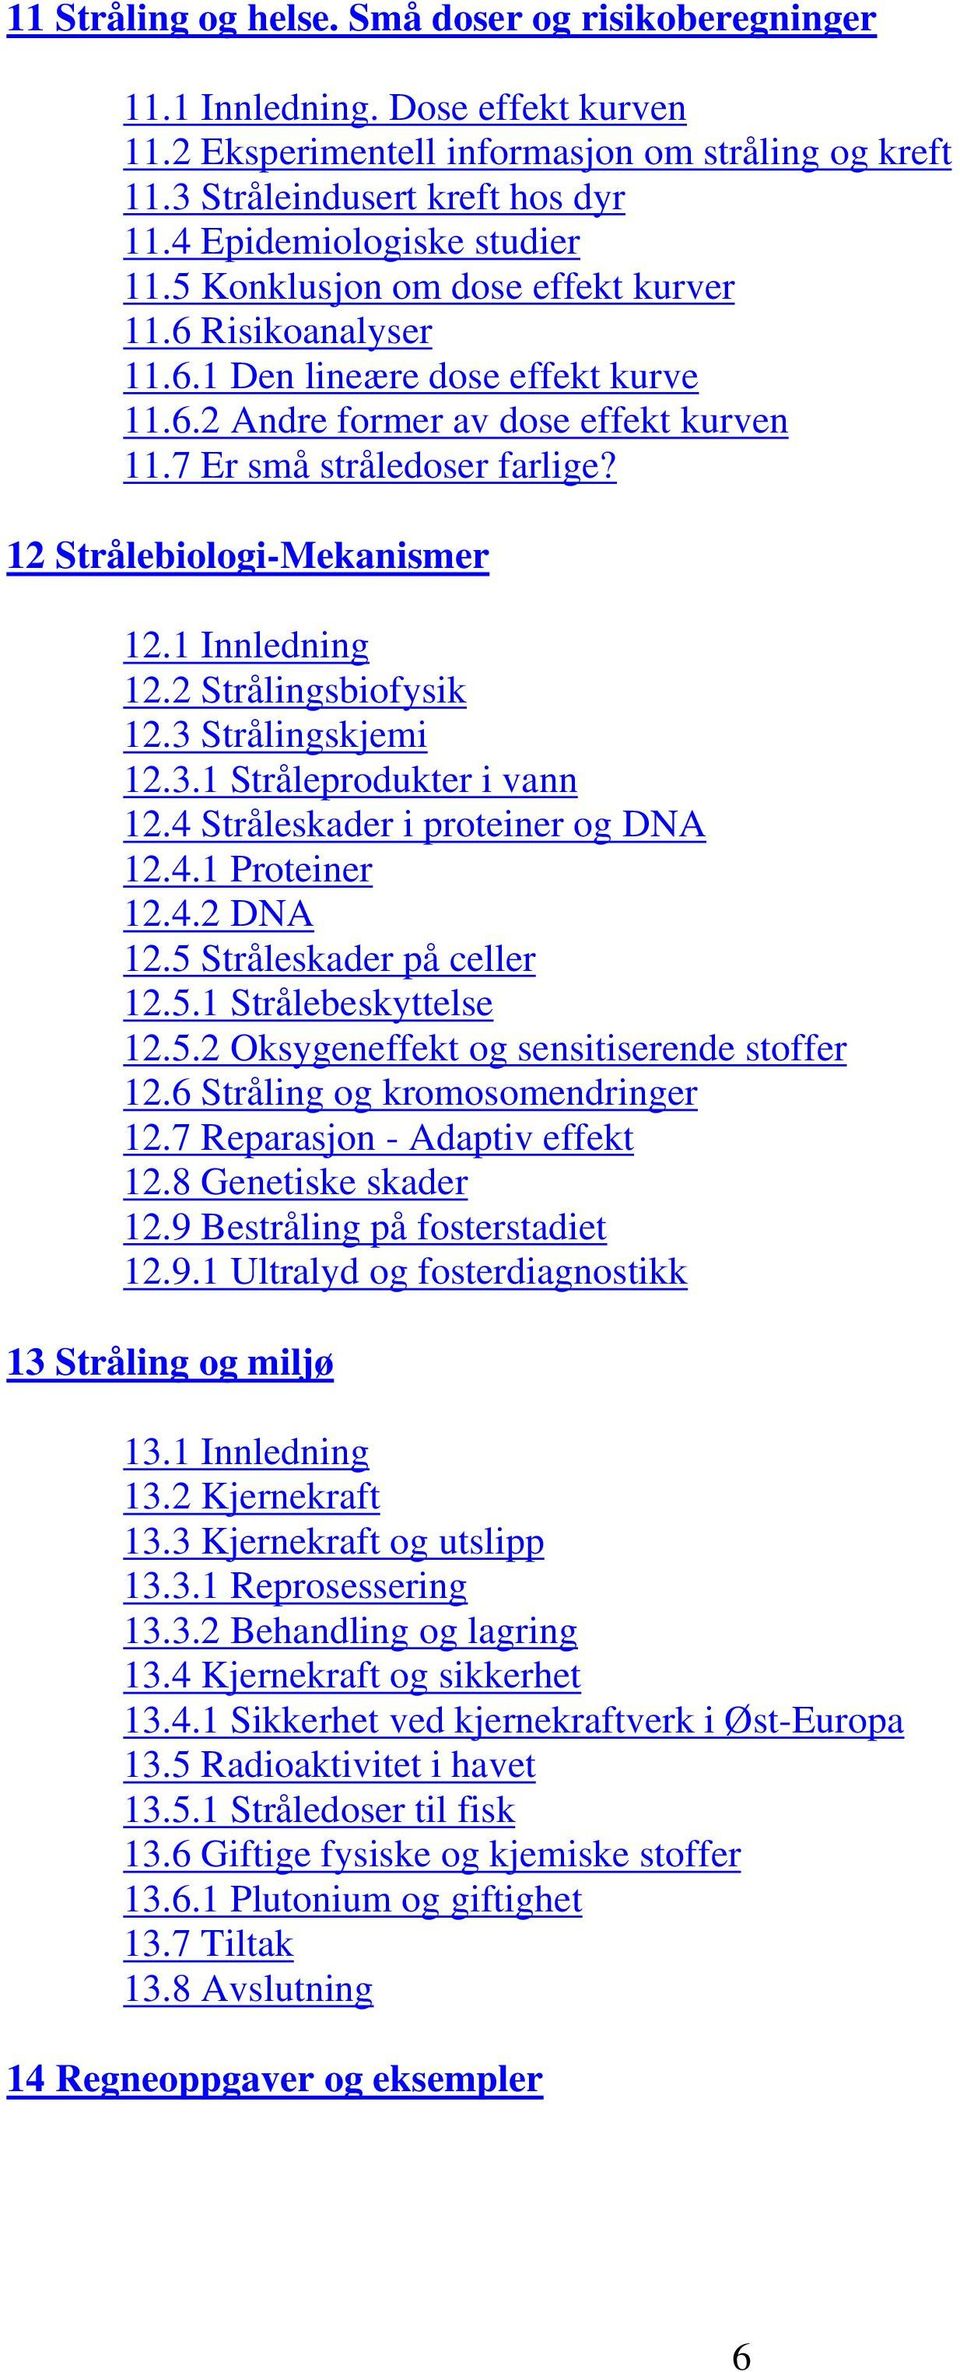 12 Strålebiologi-Mekanismer 12.1 Innledning 12.2 Strålingsbiofysik 12.3 Strålingskjemi 12.3.1 Stråleprodukter i vann 12.4 Stråleskader i proteiner og DNA 12.4.1 Proteiner 12.4.2 DNA 12.